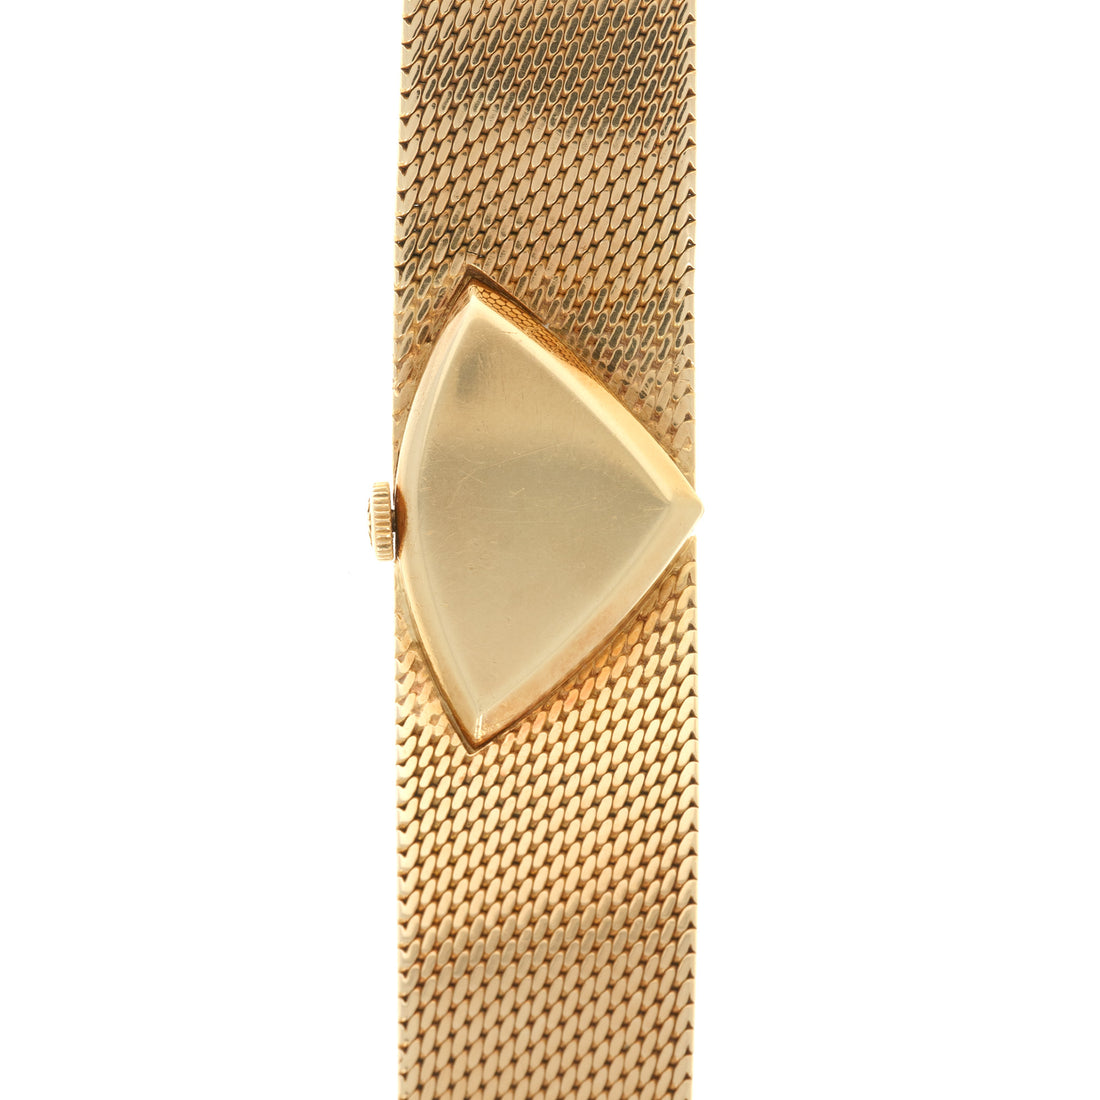 Patek Philippe Yellow Gold Asymmetrical Watch, Ref. 3270, Designed by Gilbert Albert